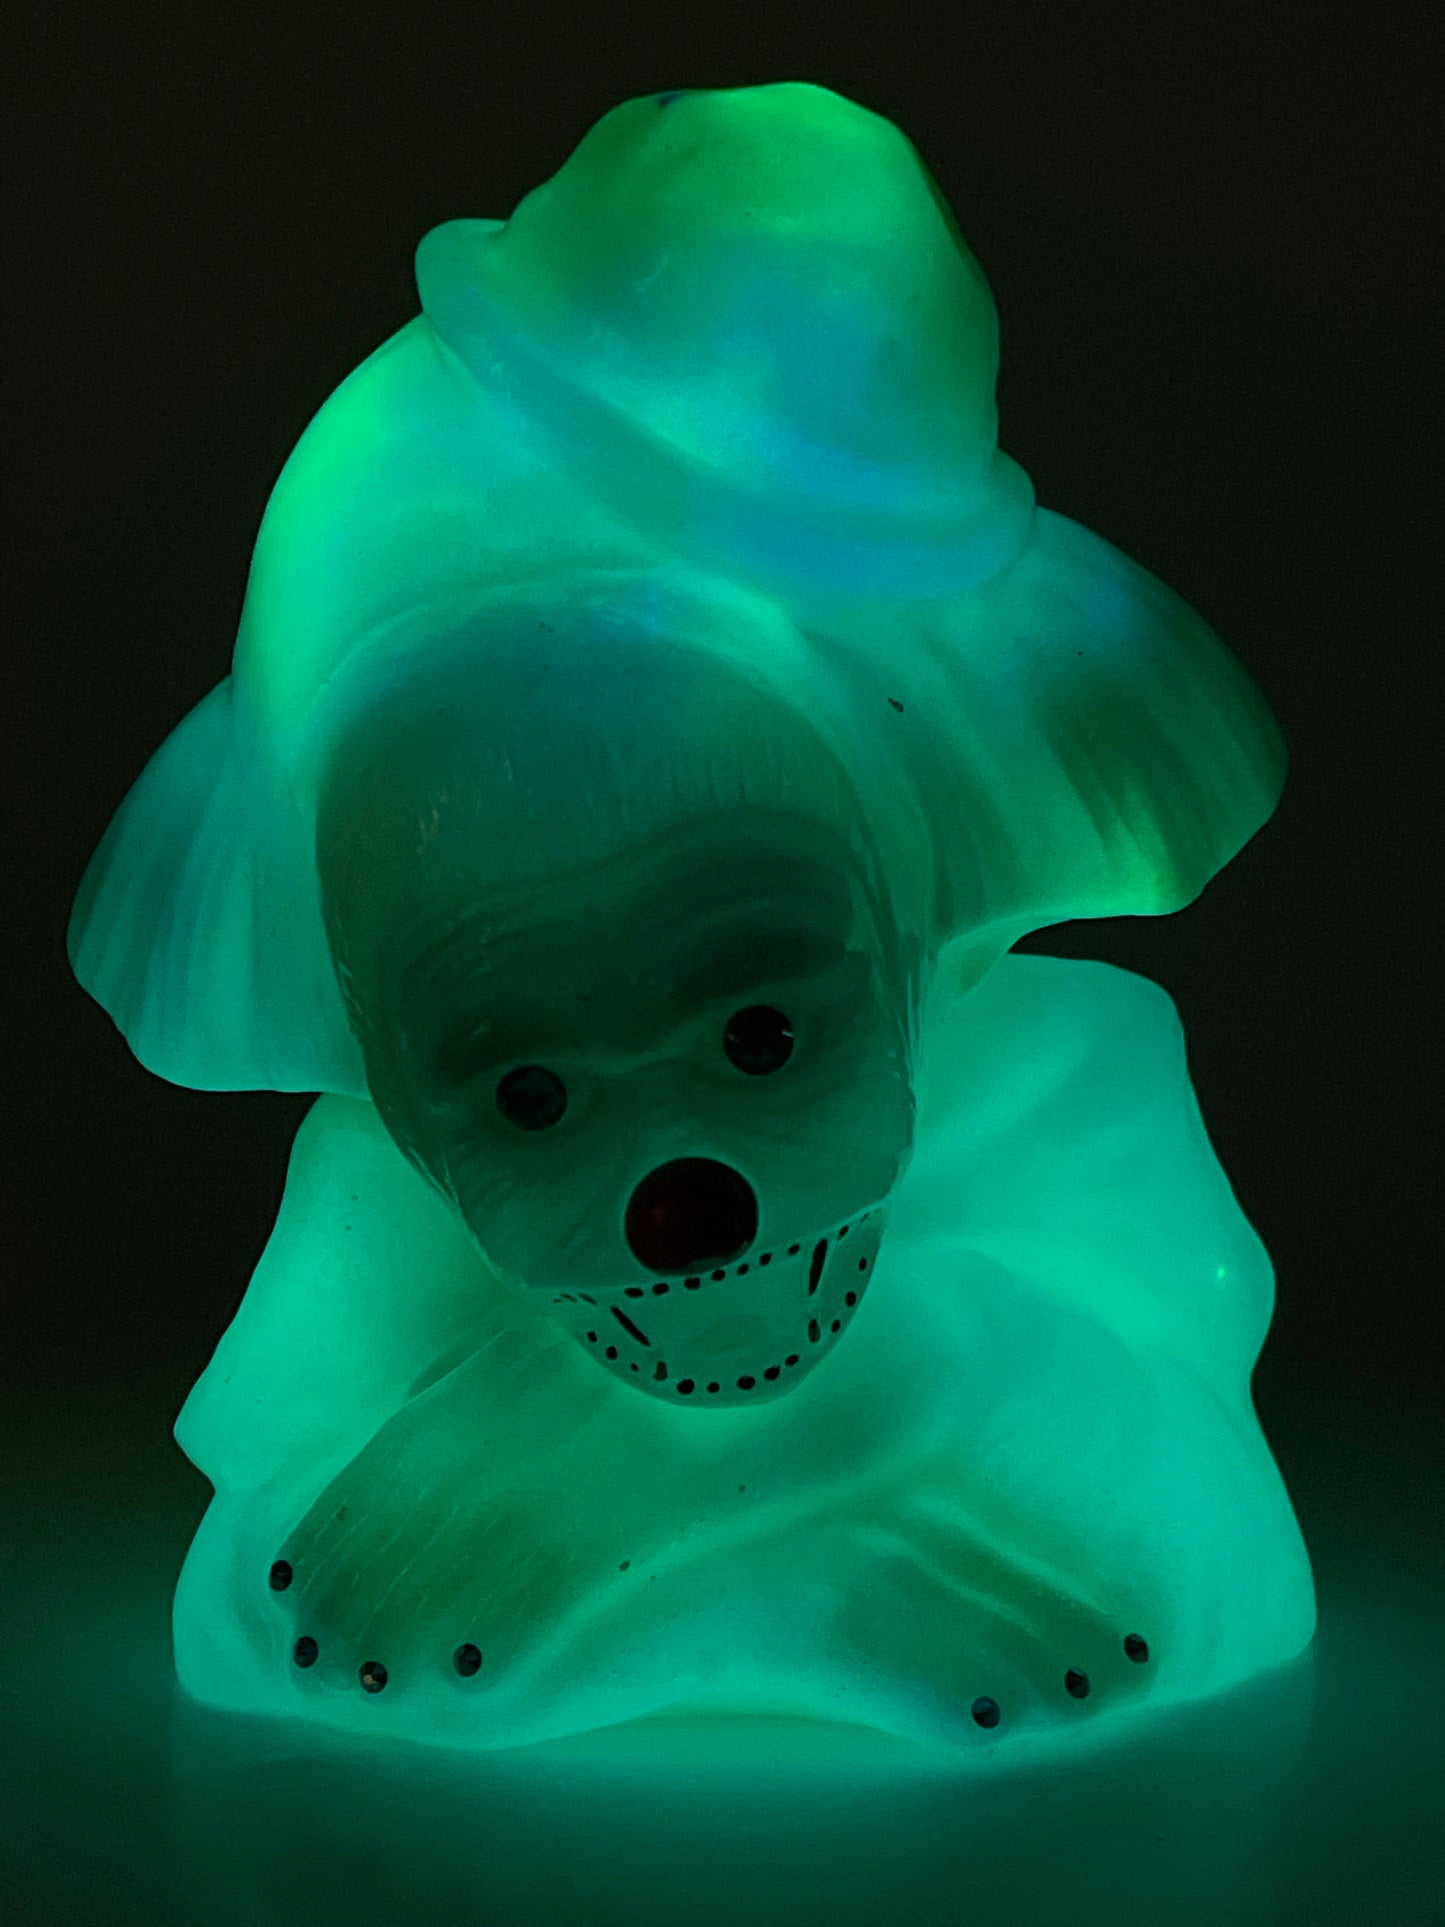 Ape Clown, Ready for His Closeup: Green and Blue Glow Entertaining Fun